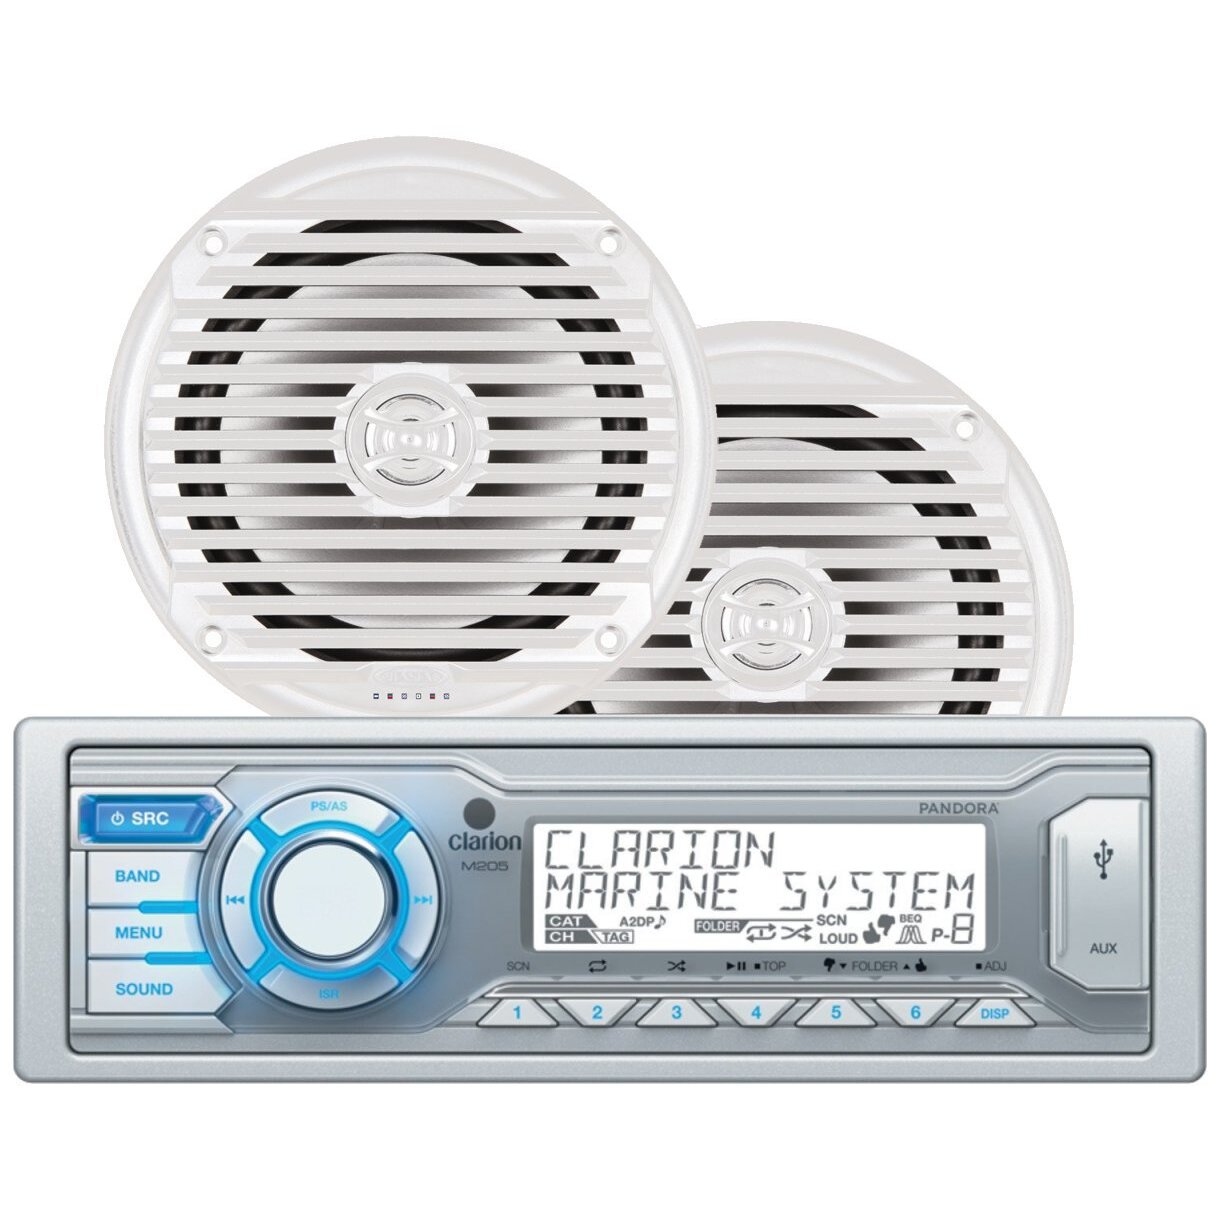 Clarion M205 AM/FM Radio Receiver USB Port Pandora 200 Watt Marine Stereo With 2 Waterproof 6.5" Speakers